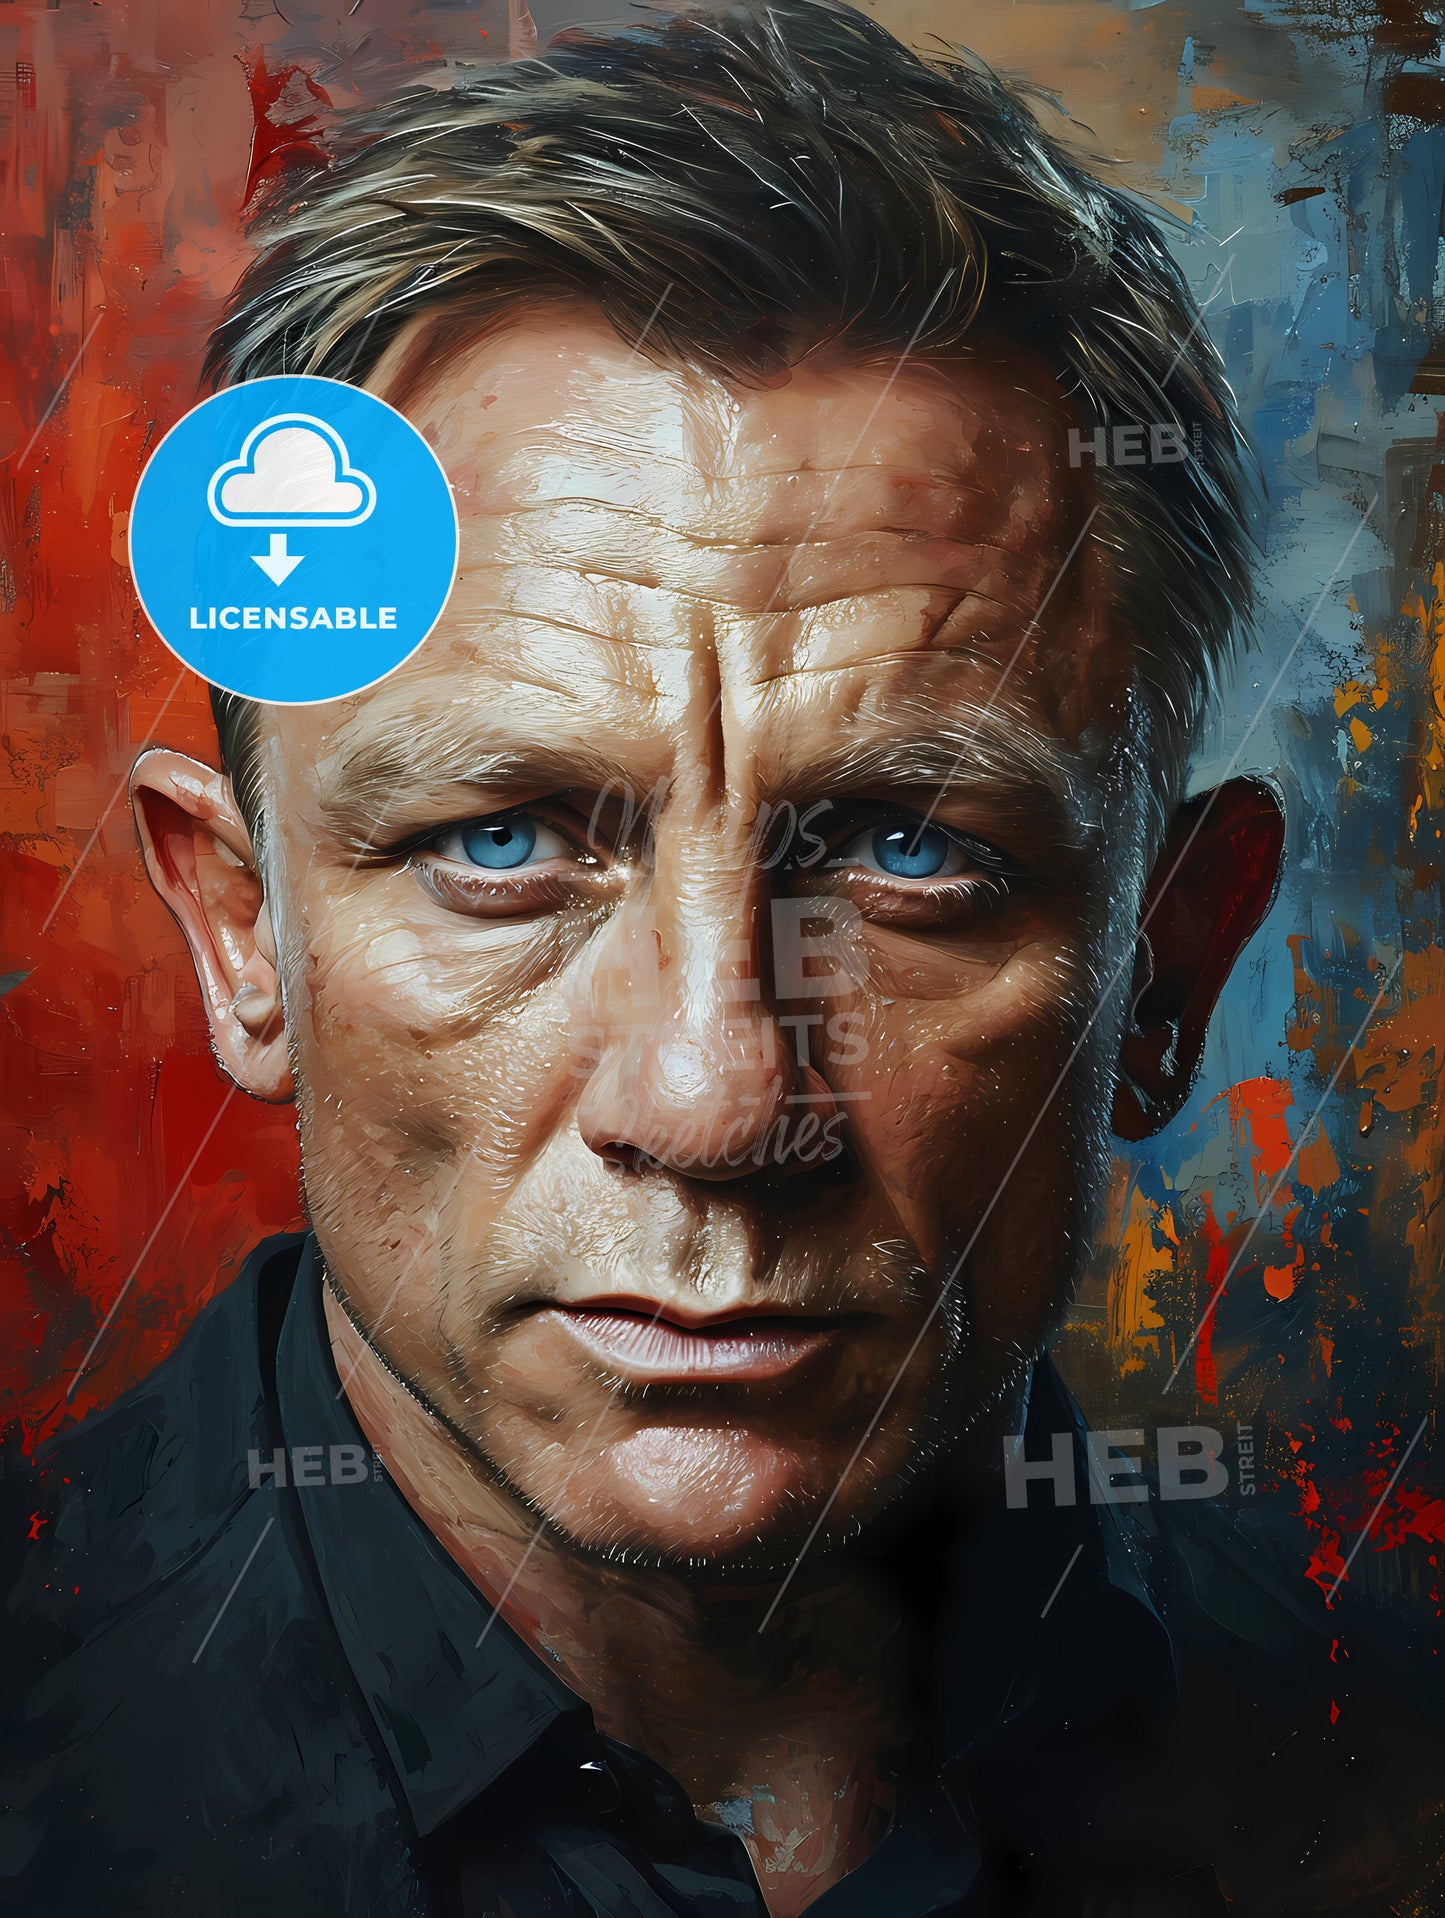 James Bond Portrait, A Man With Blue Eyes